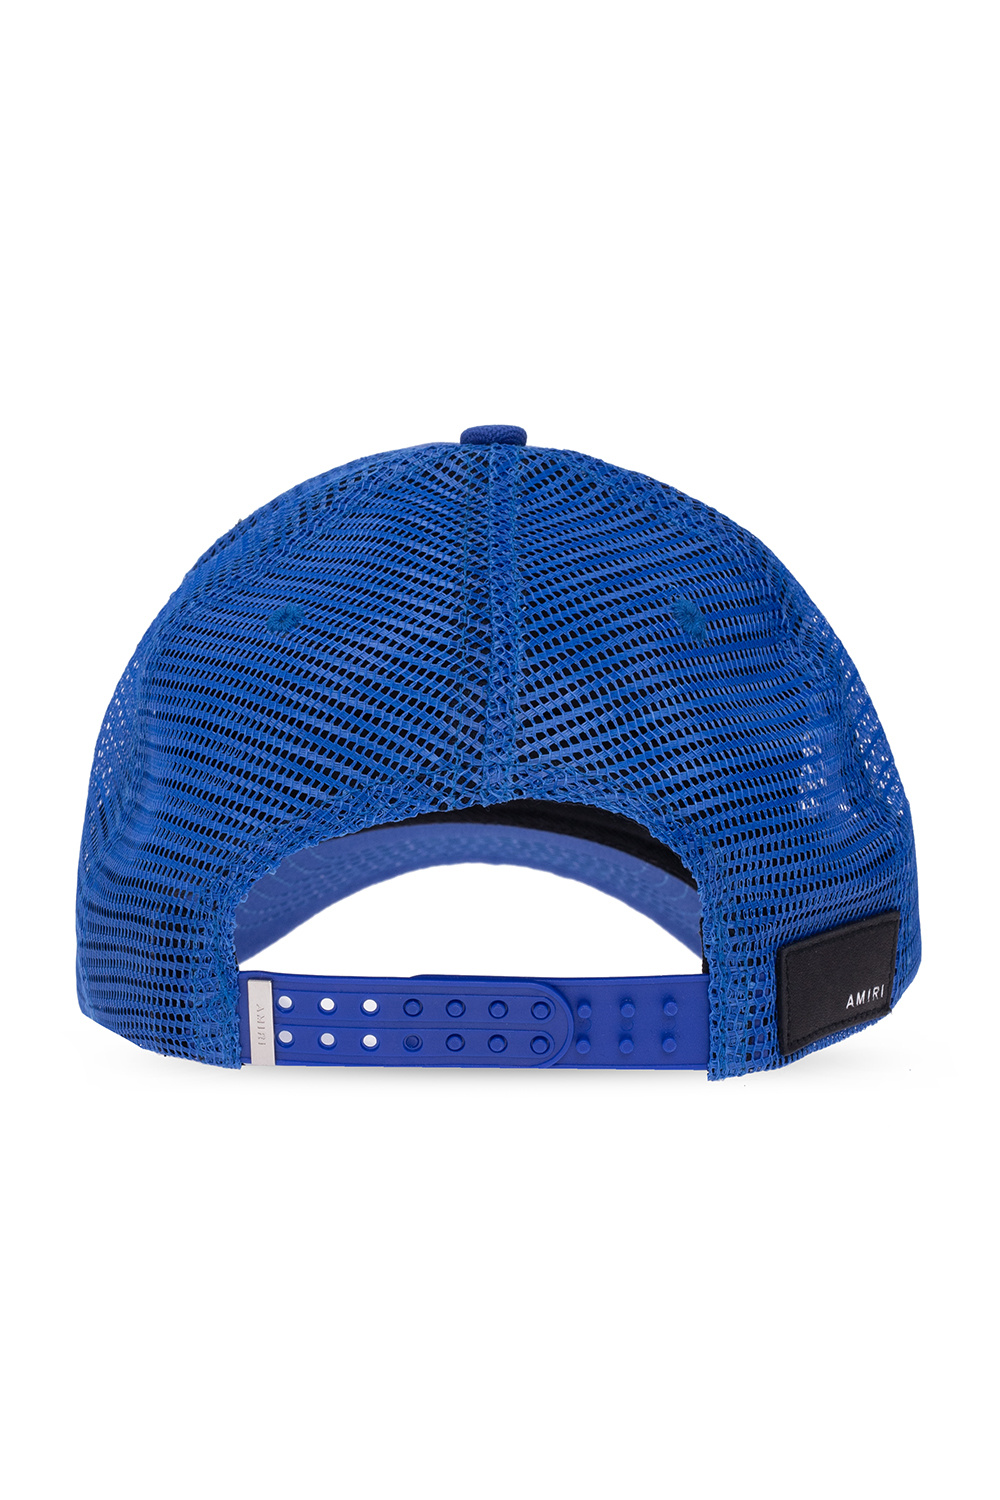 | stretch-jersey | Baseball trapper | Men\'s IetpShops Accessories Amiri cap hat